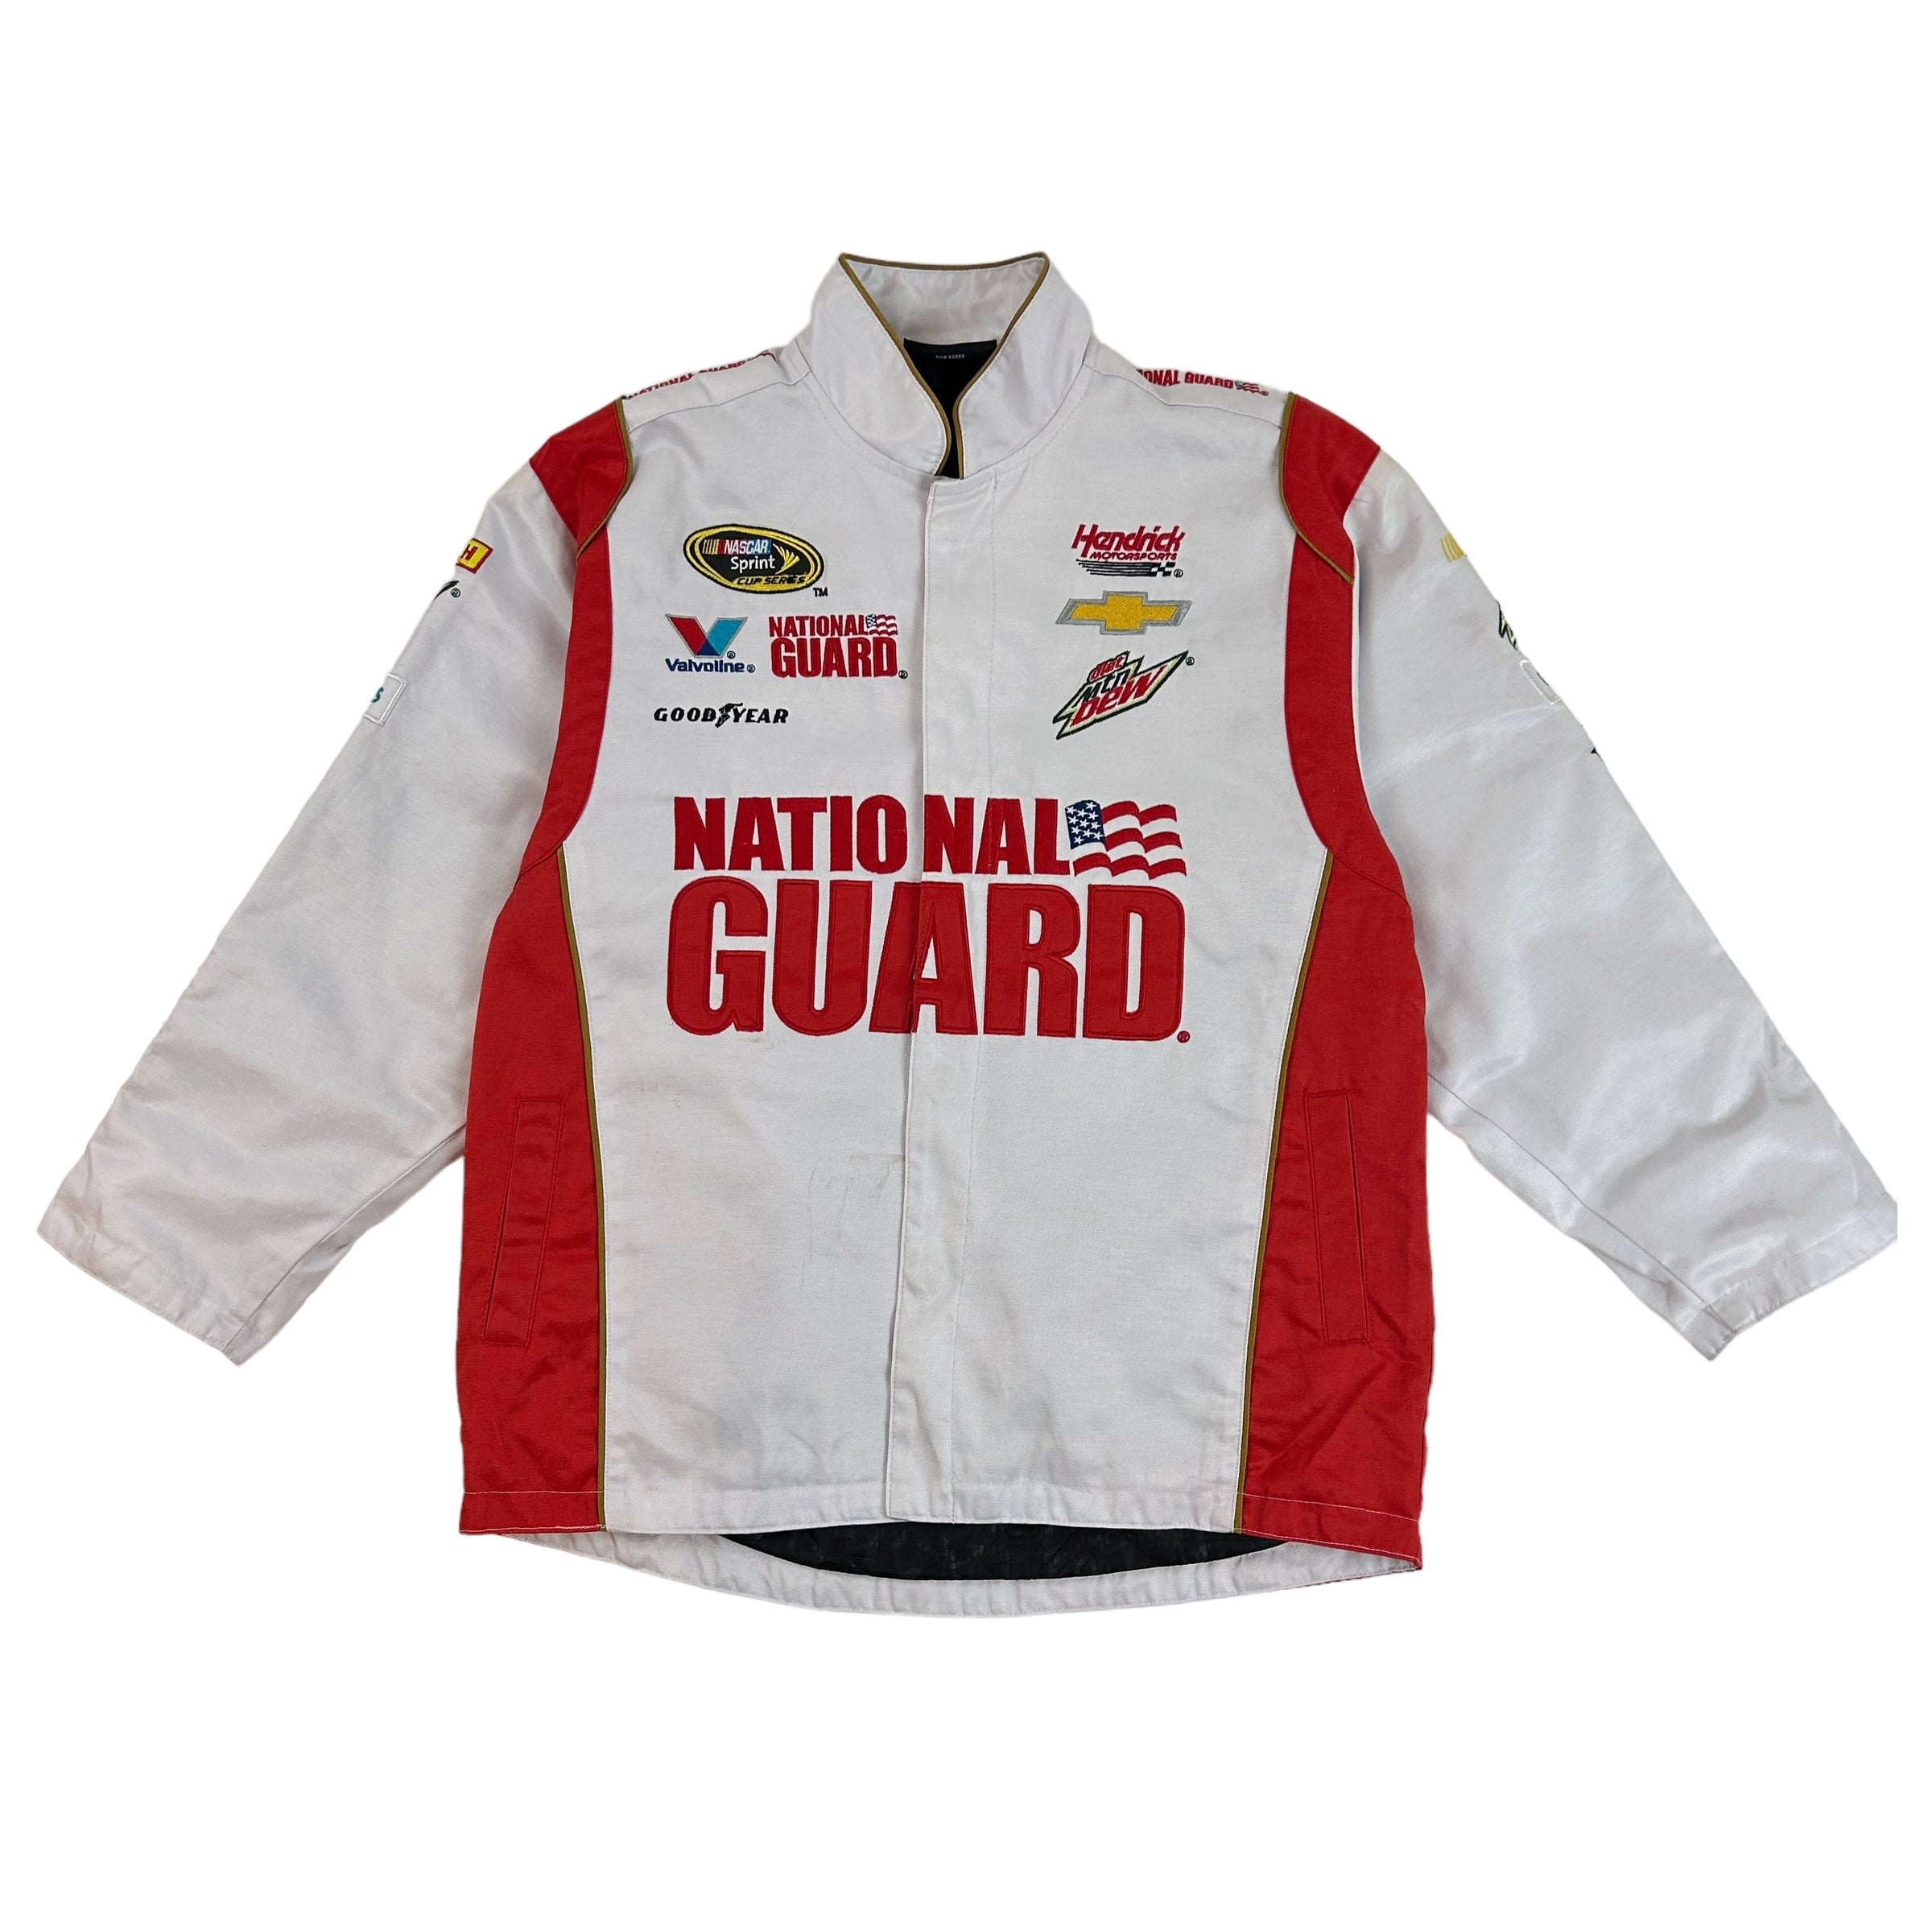 Vintage National Guard Racing Jacket